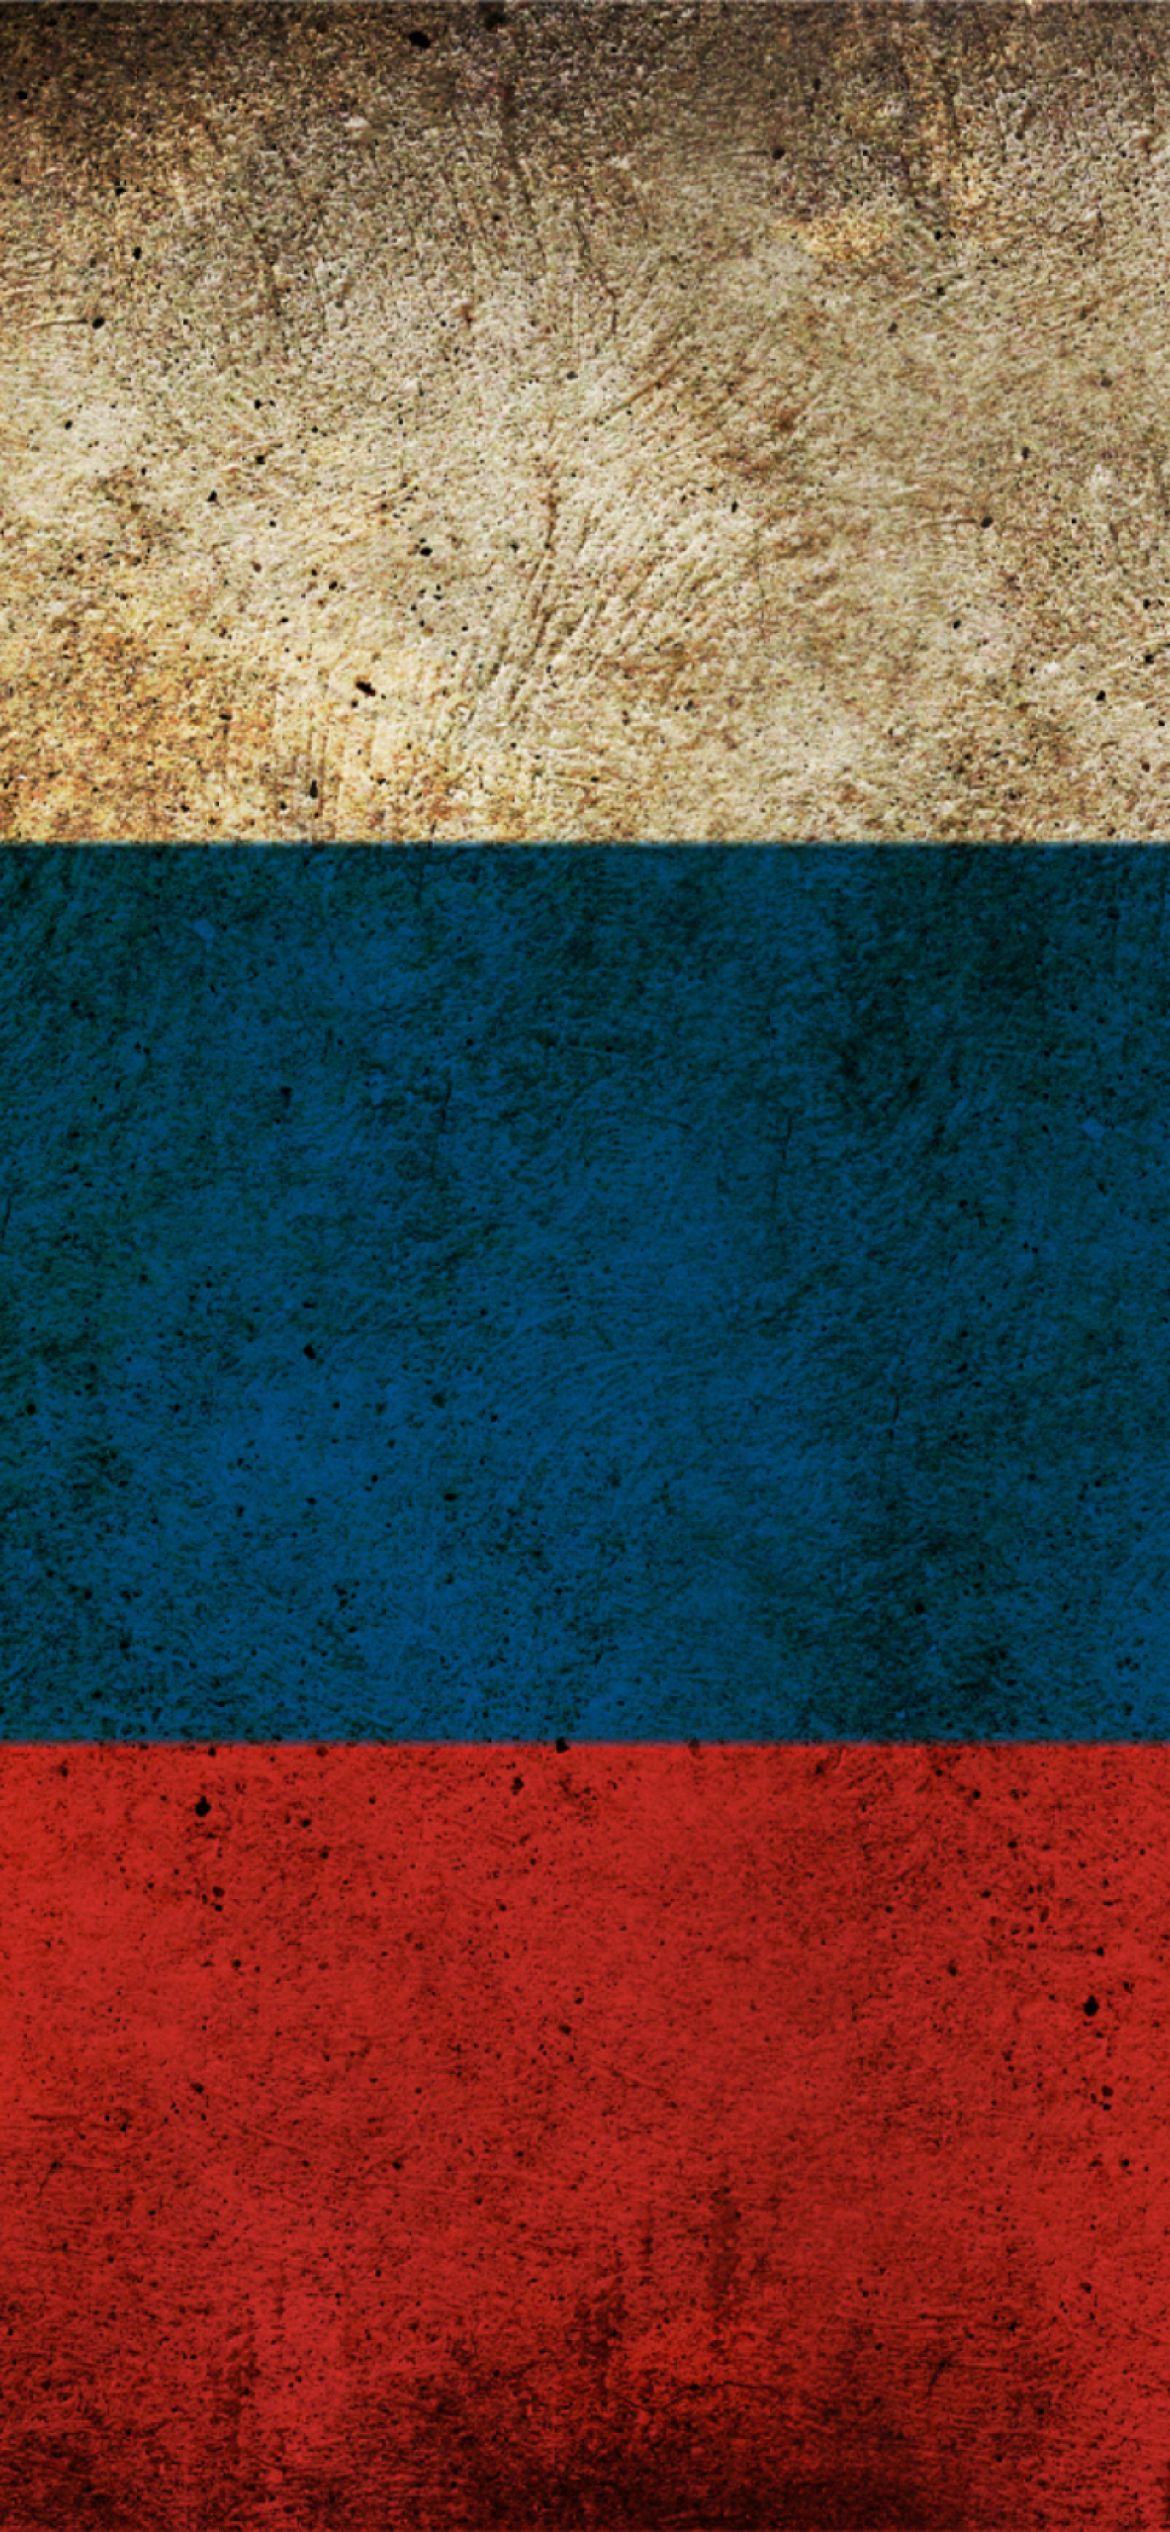 Das Russian Flag - Flag of Russia Wallpaper 1170x2532